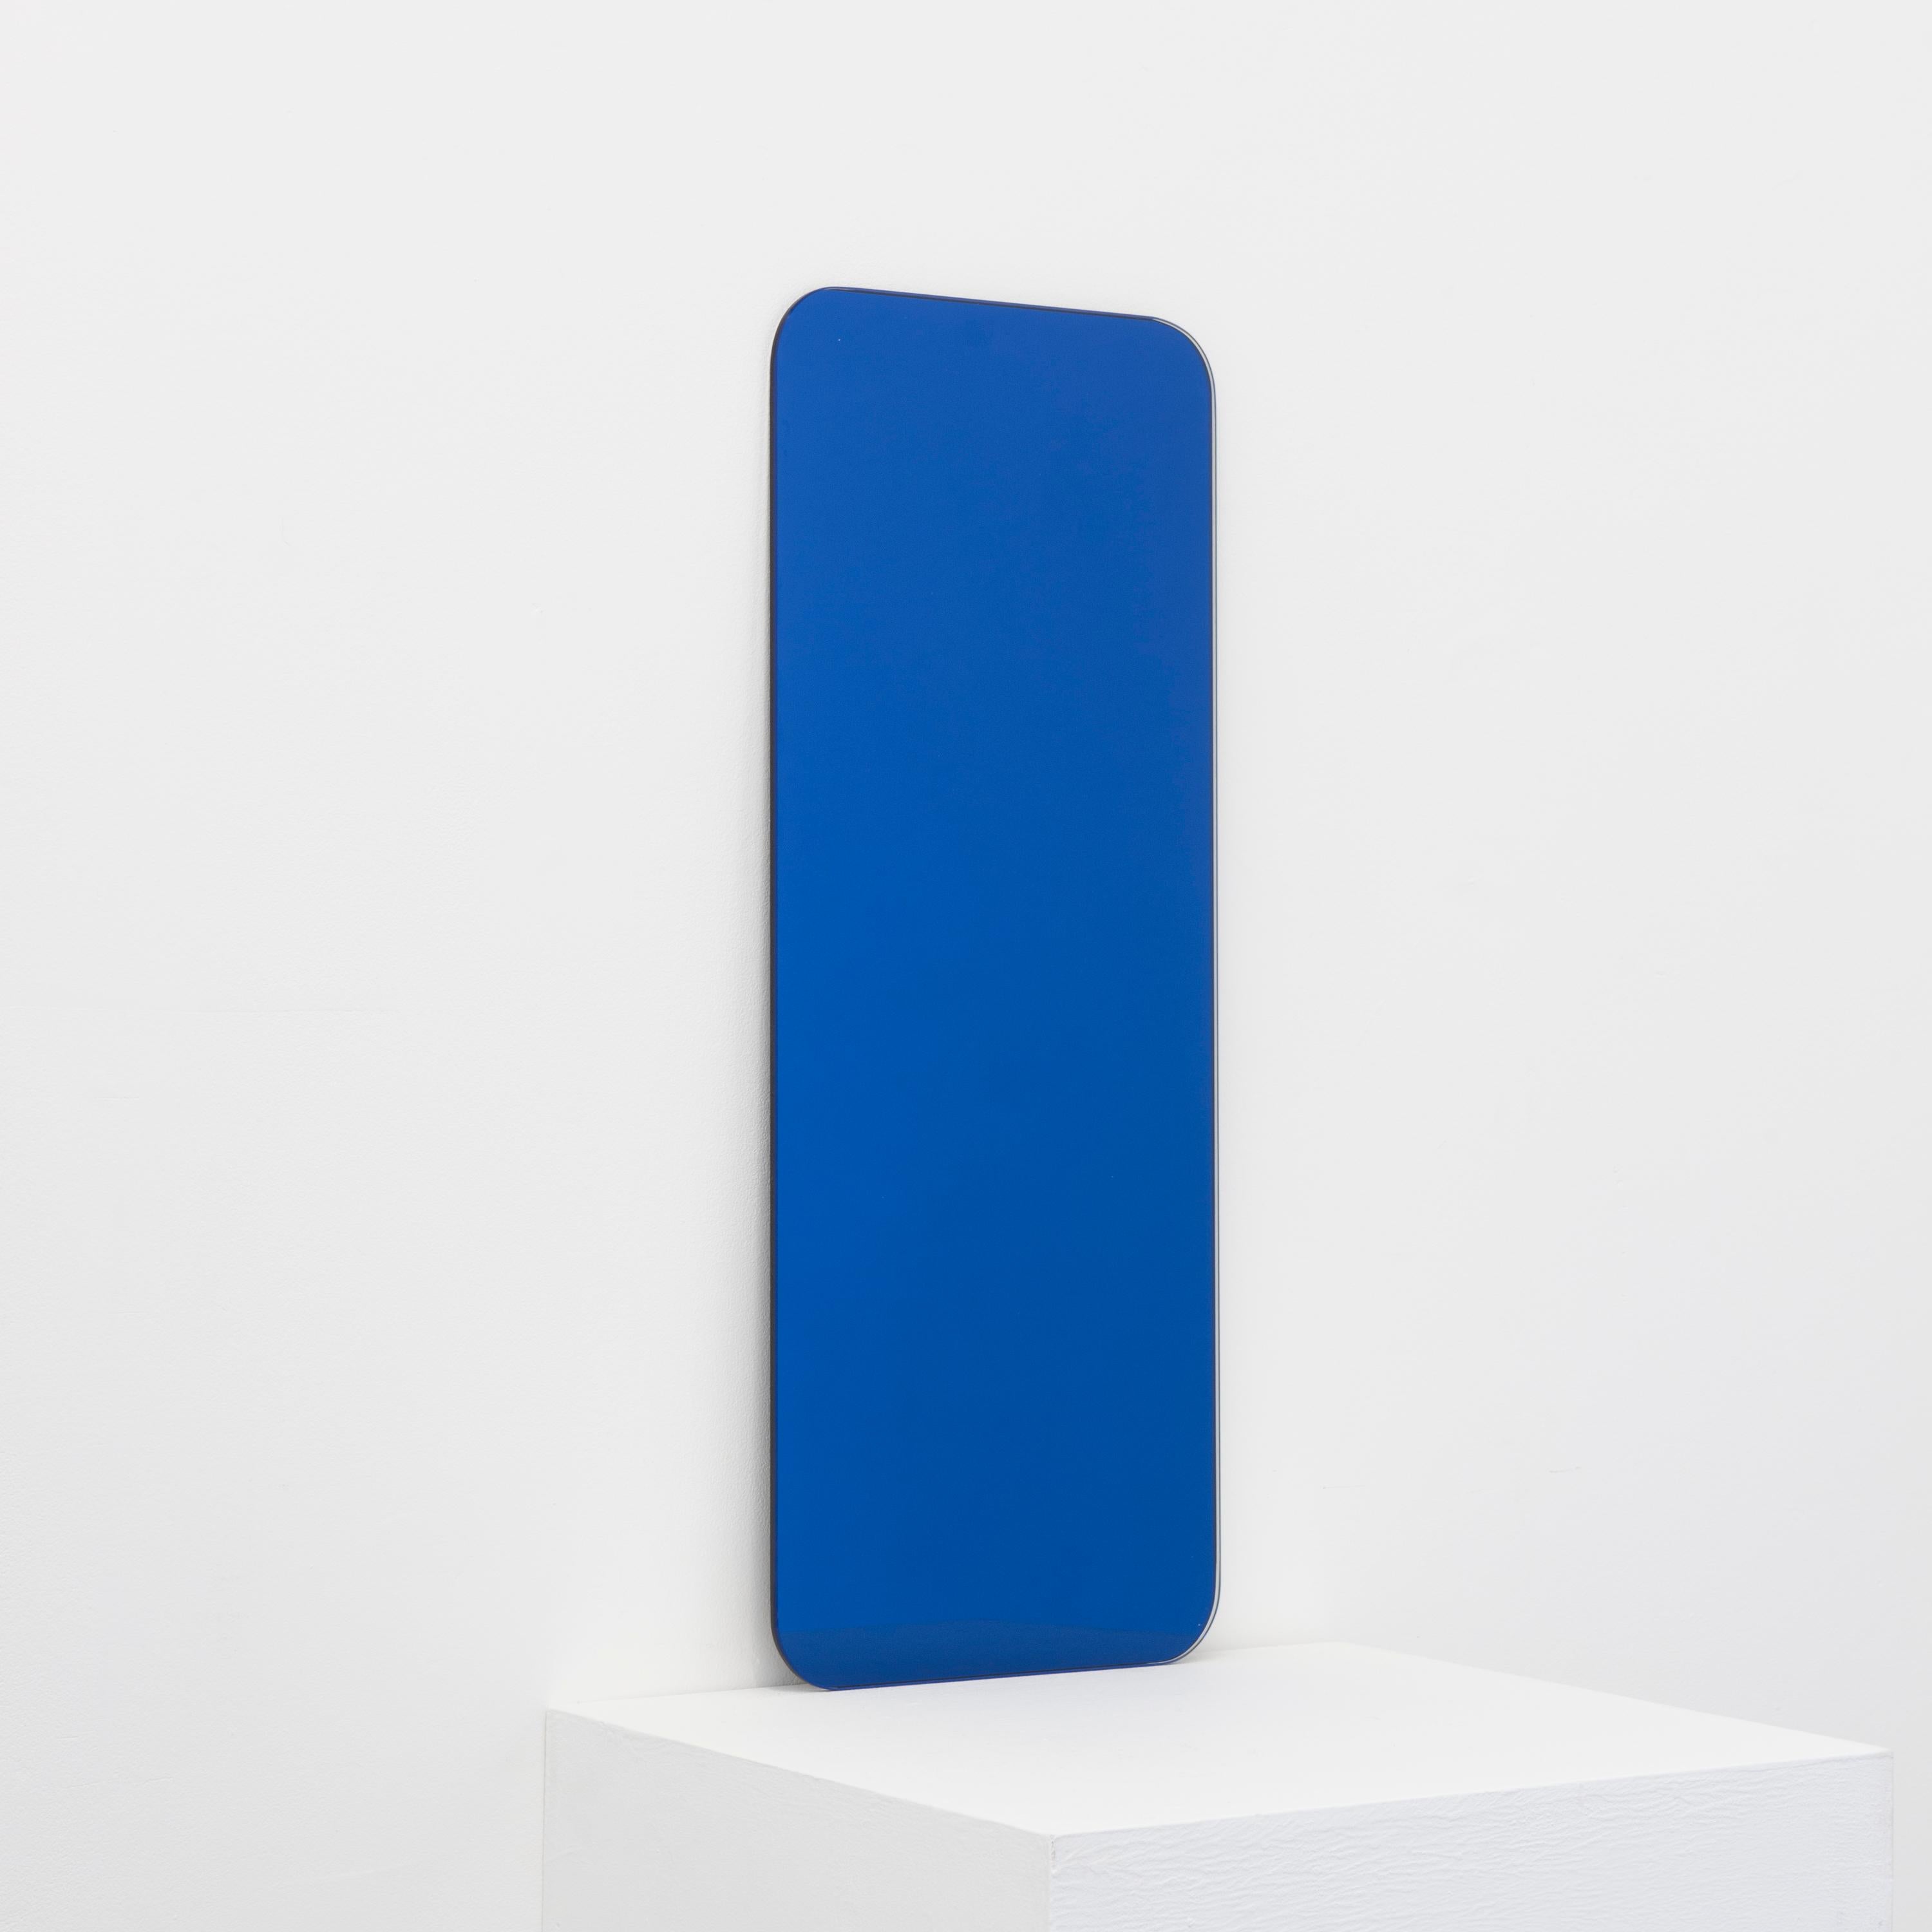 Quadris Blue Rectangular Frameless Contemporary Mirror, Medium In New Condition For Sale In London, GB